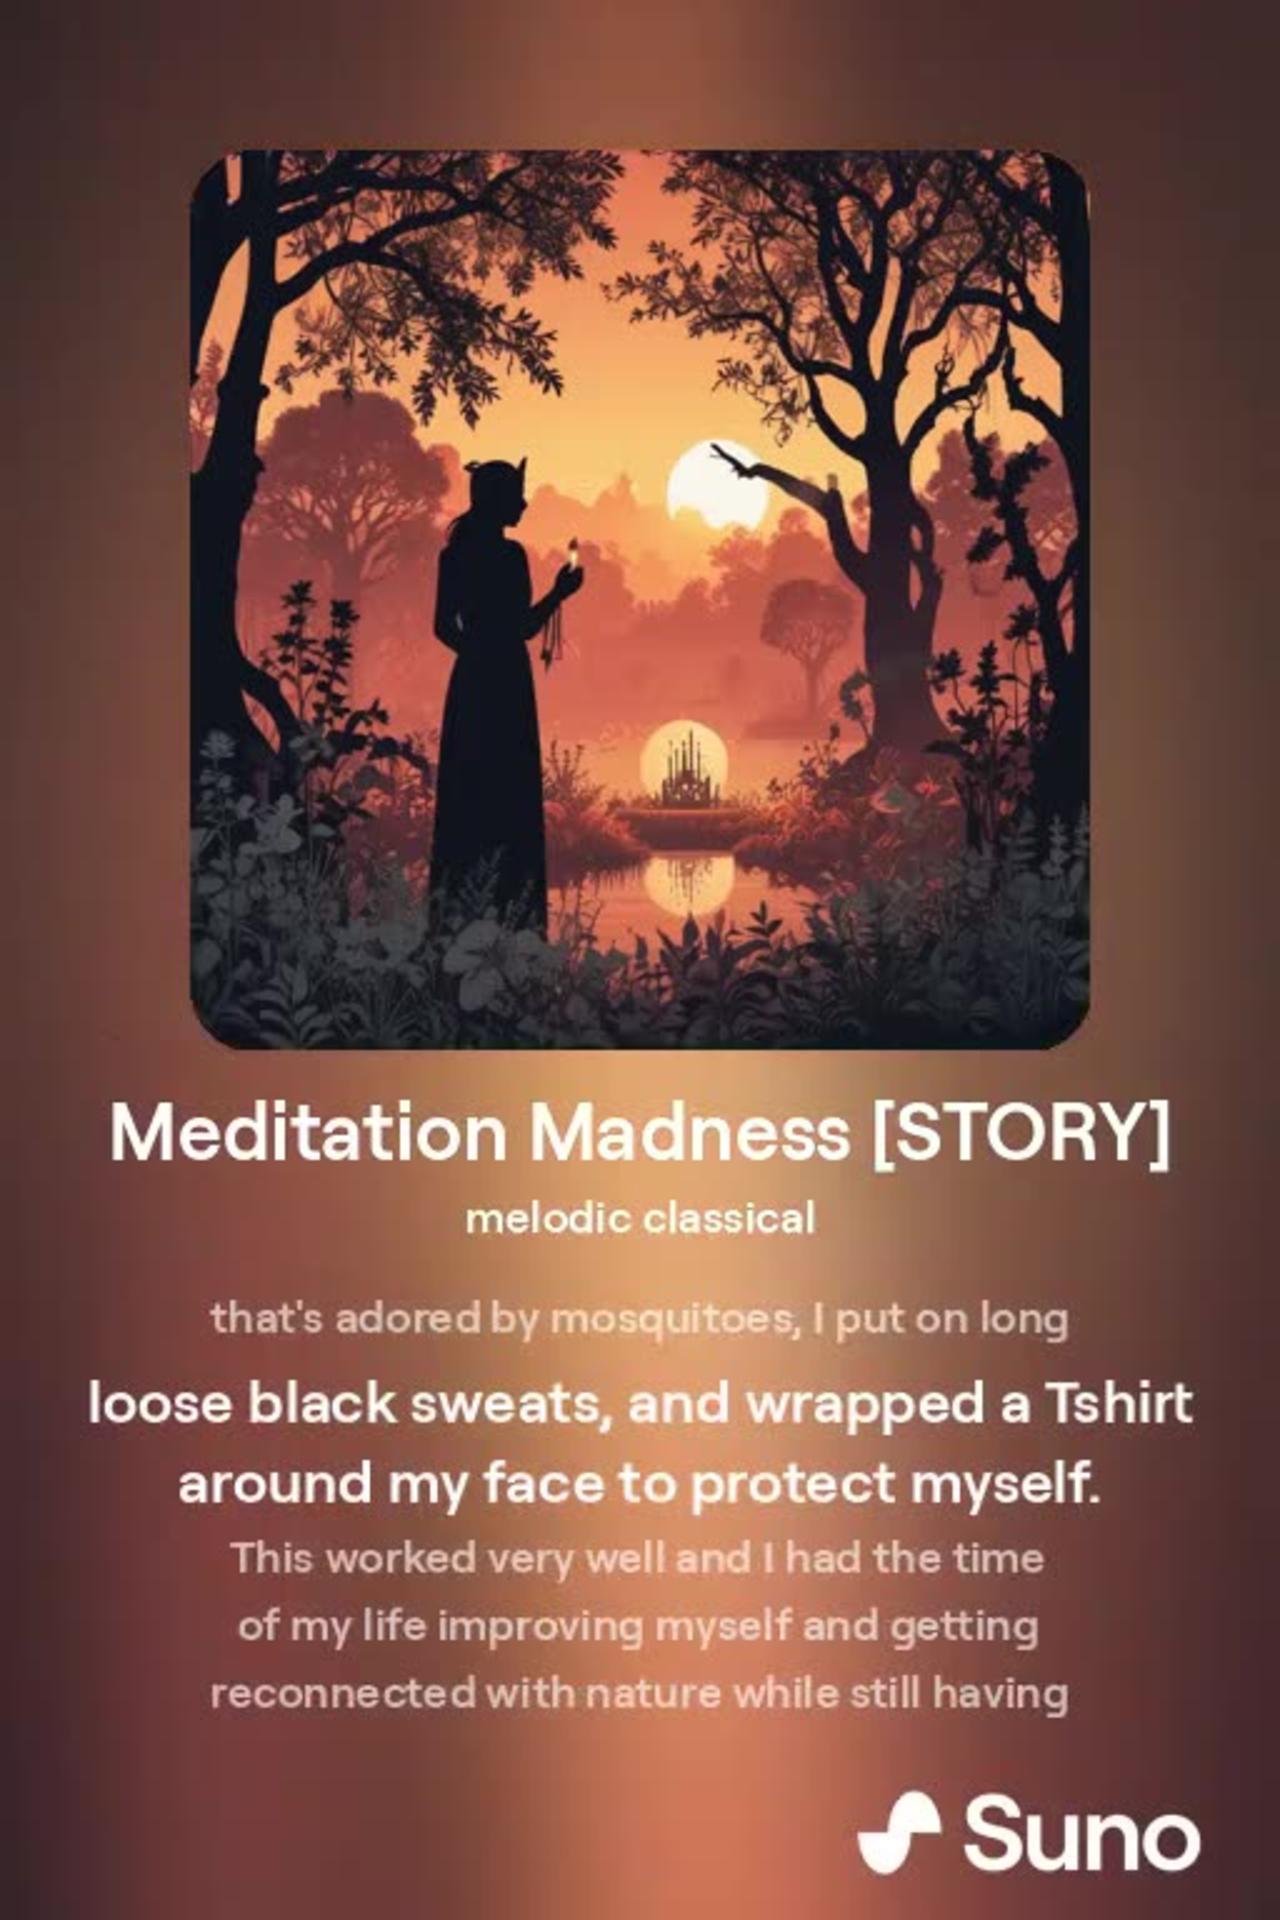 Meditation Madness [STORY] – One News Page VIDEO